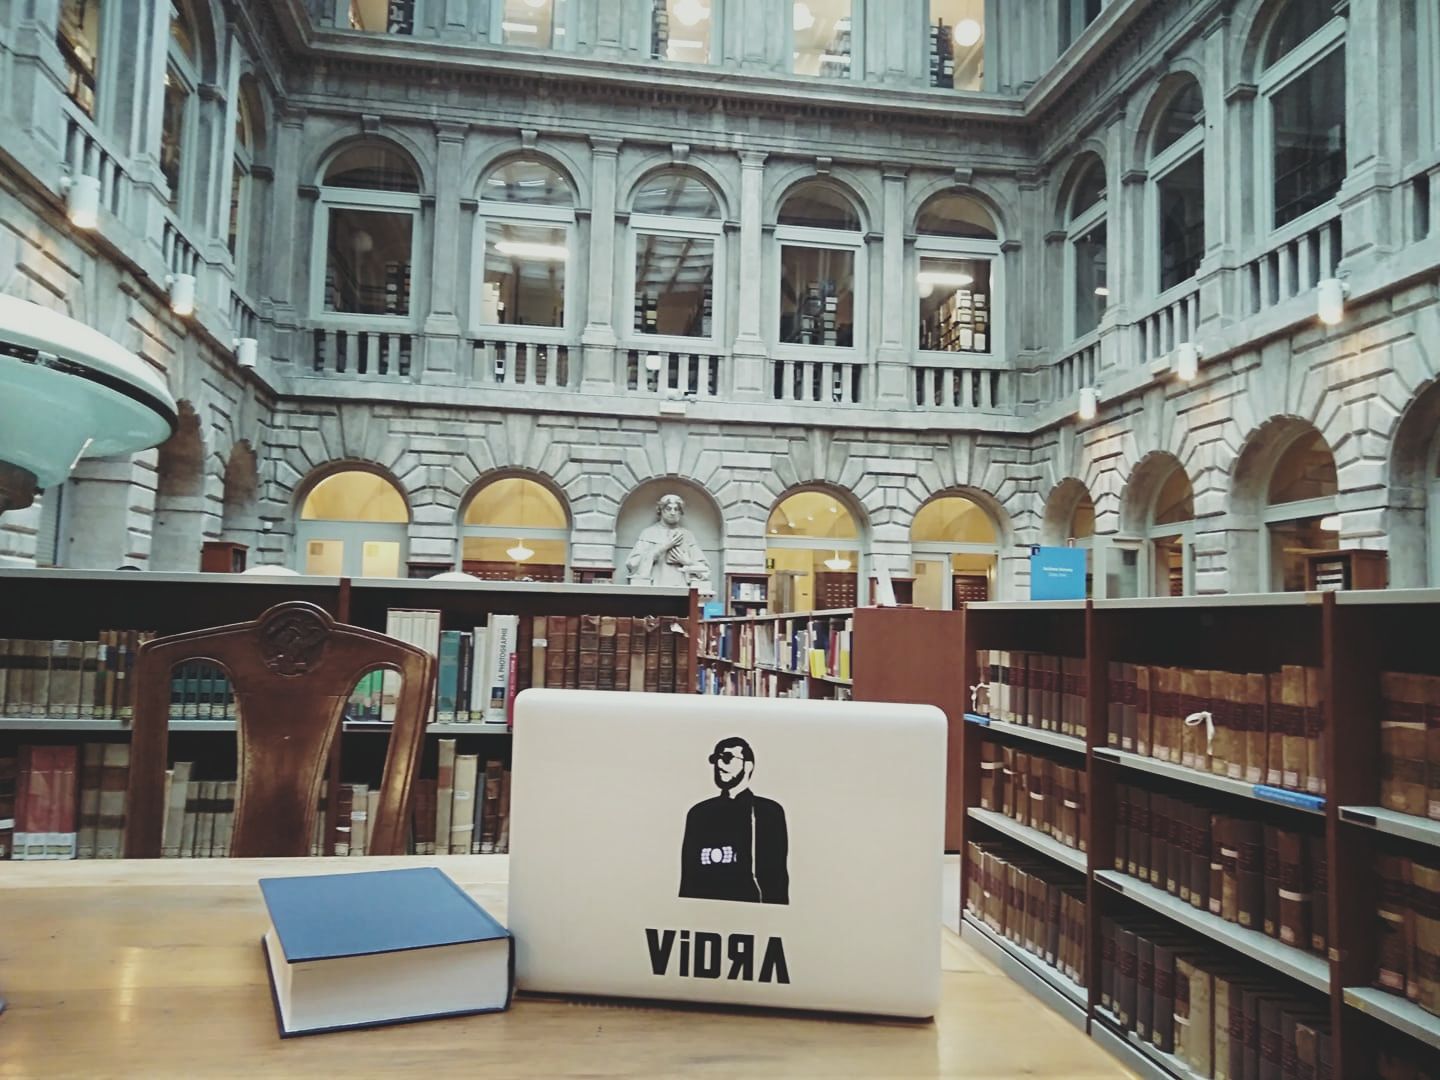 Fecondo on Twitter: "Venice, Marciana Library! Studying Malipiero and Rudolf Steiner #vidra #marciana #nazionalemarciana #marcianalibrary #gianfrancescomalipiero #malipiero #rudolfsteiner / Twitter